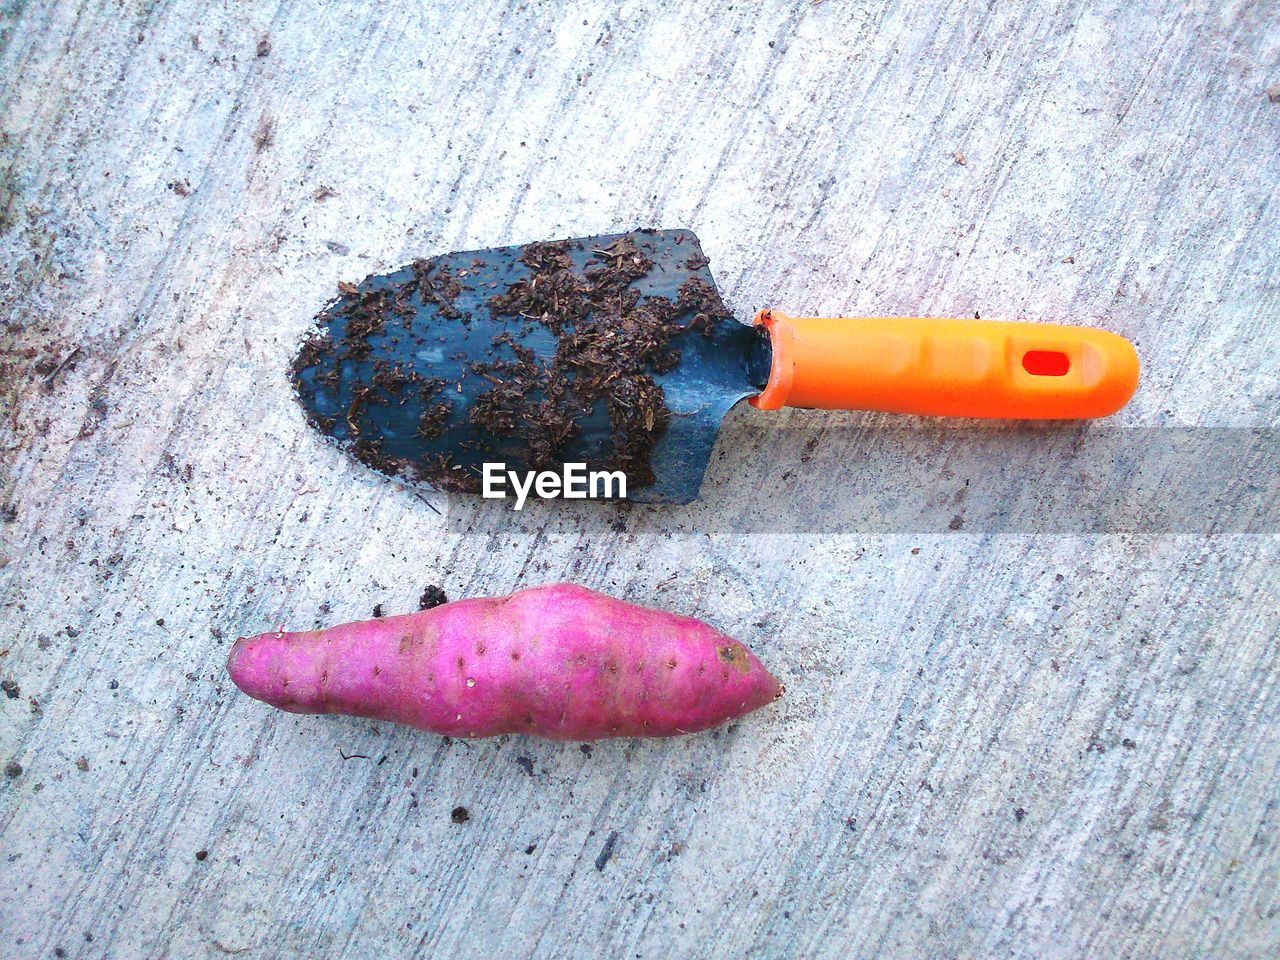 Close-up of sweet potato and spade